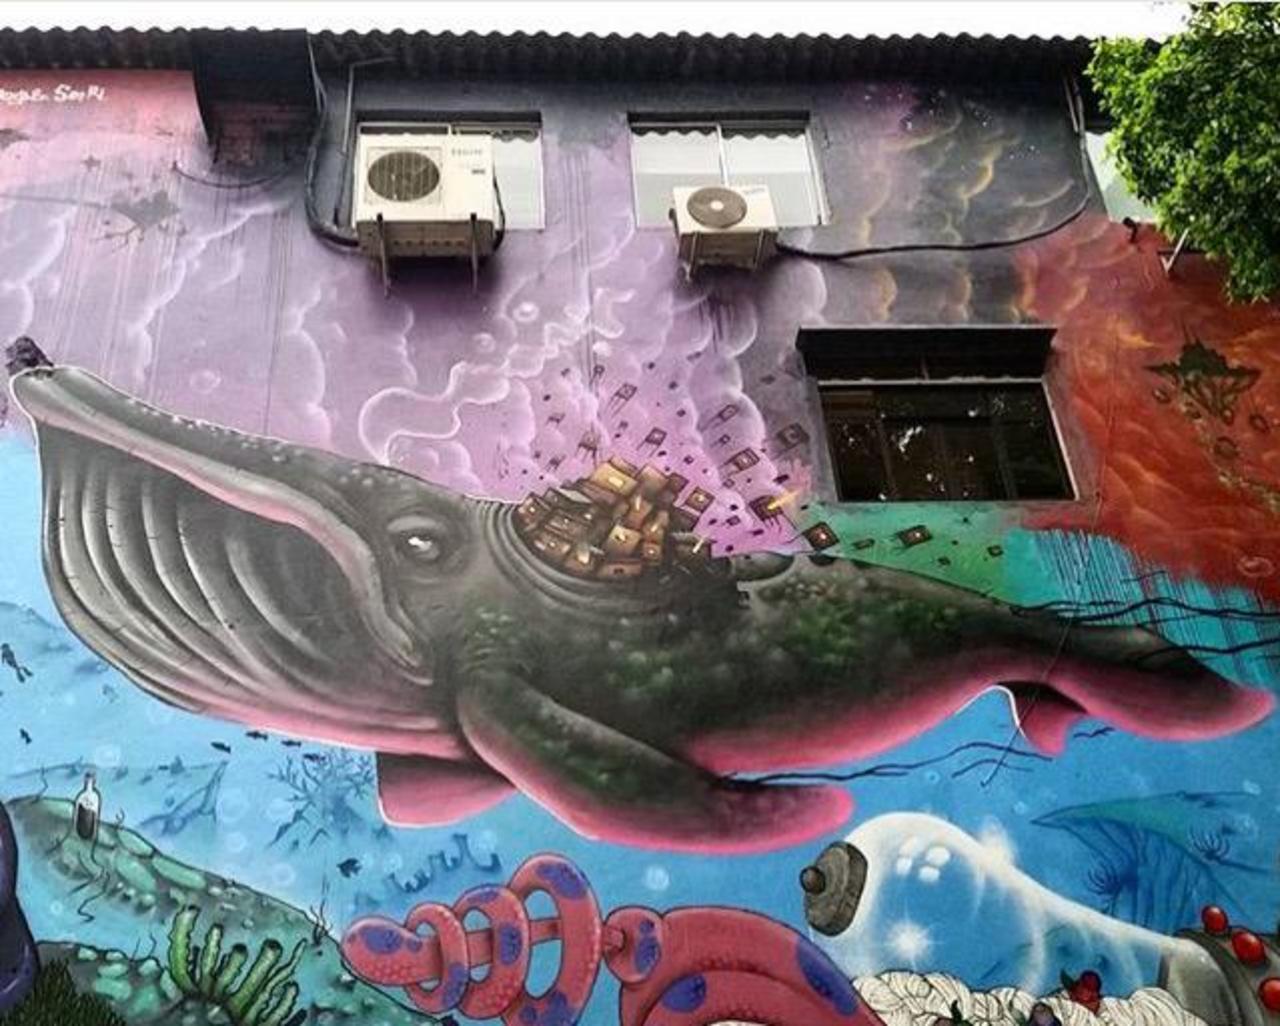 Street Art by joks_johnes Pinheiros, São Paulo 

#art #mural #graffiti #streetart http://t.co/dz13IwgDwK